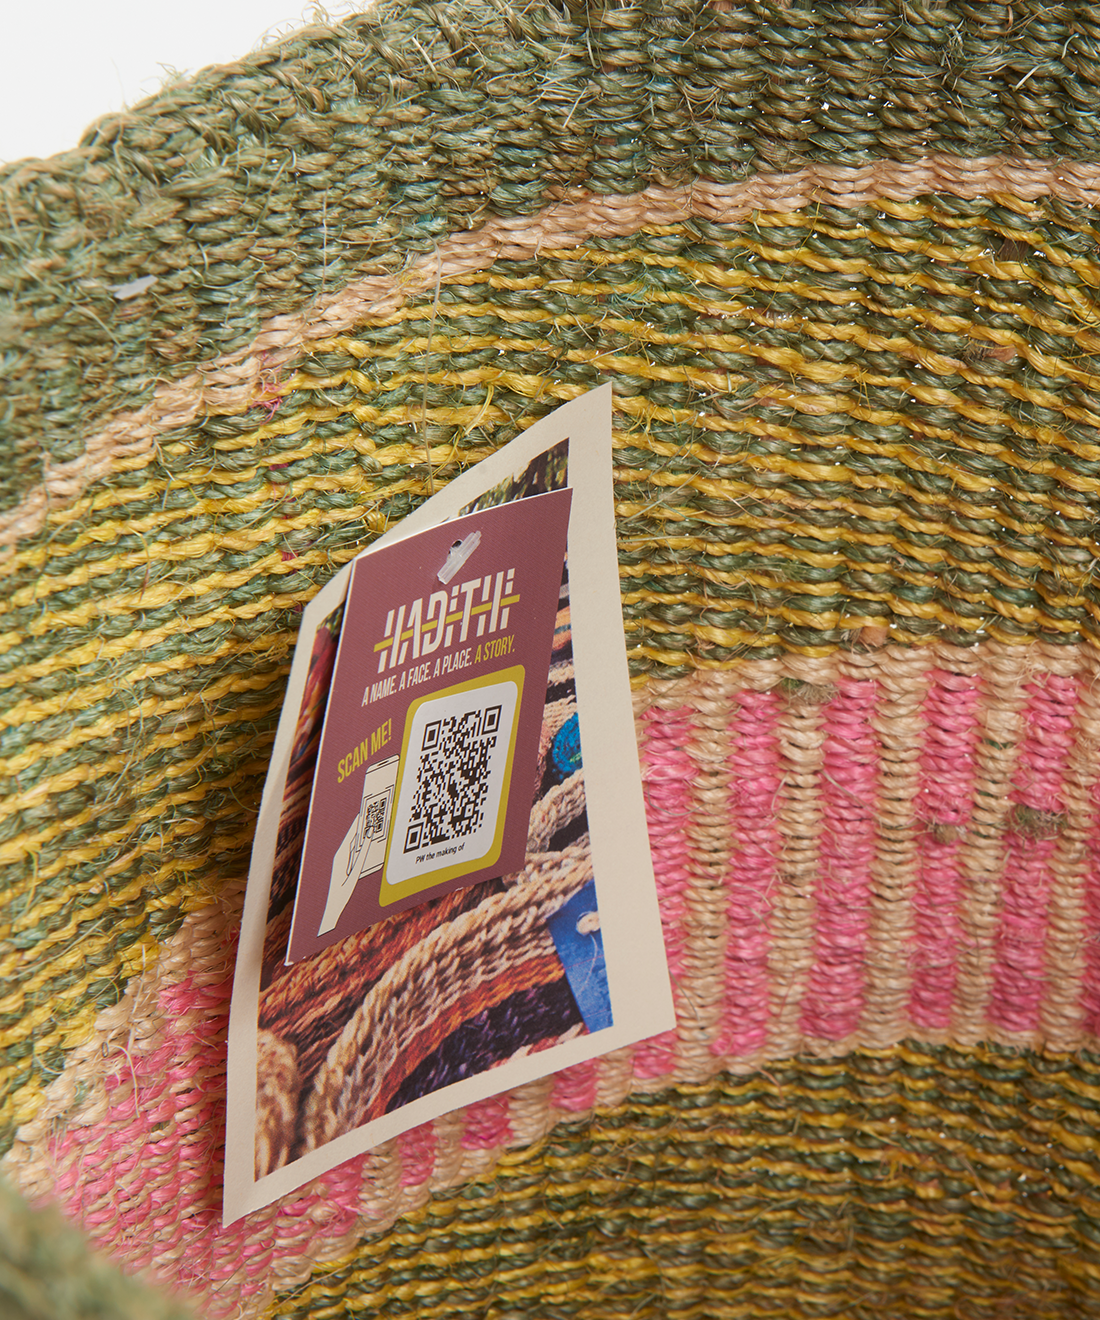 Large Practical Weave Basket, 1